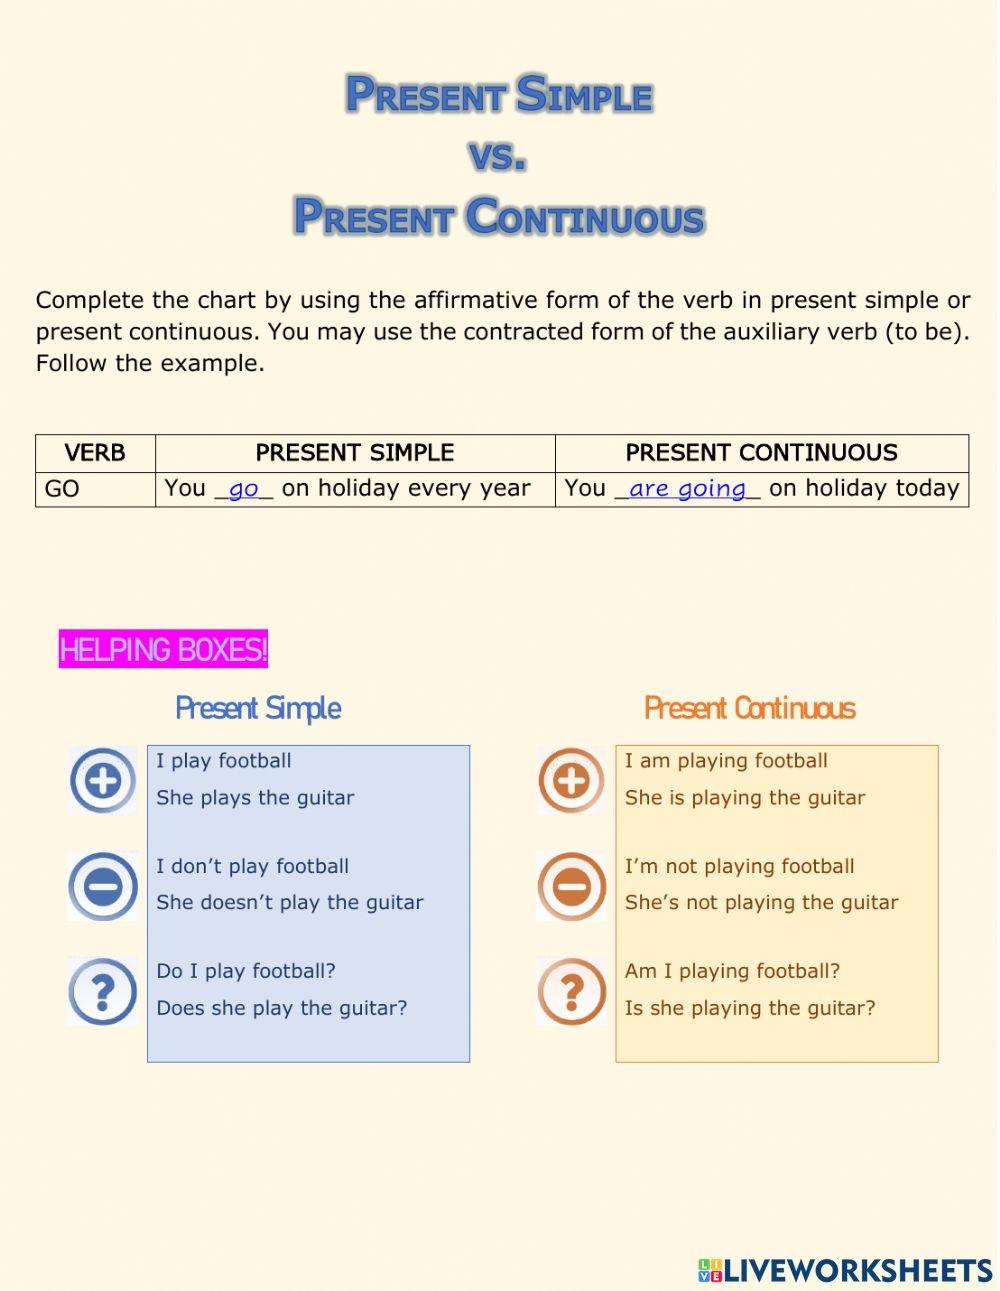 Present Simple vs. Present Continuous (affirmative form)